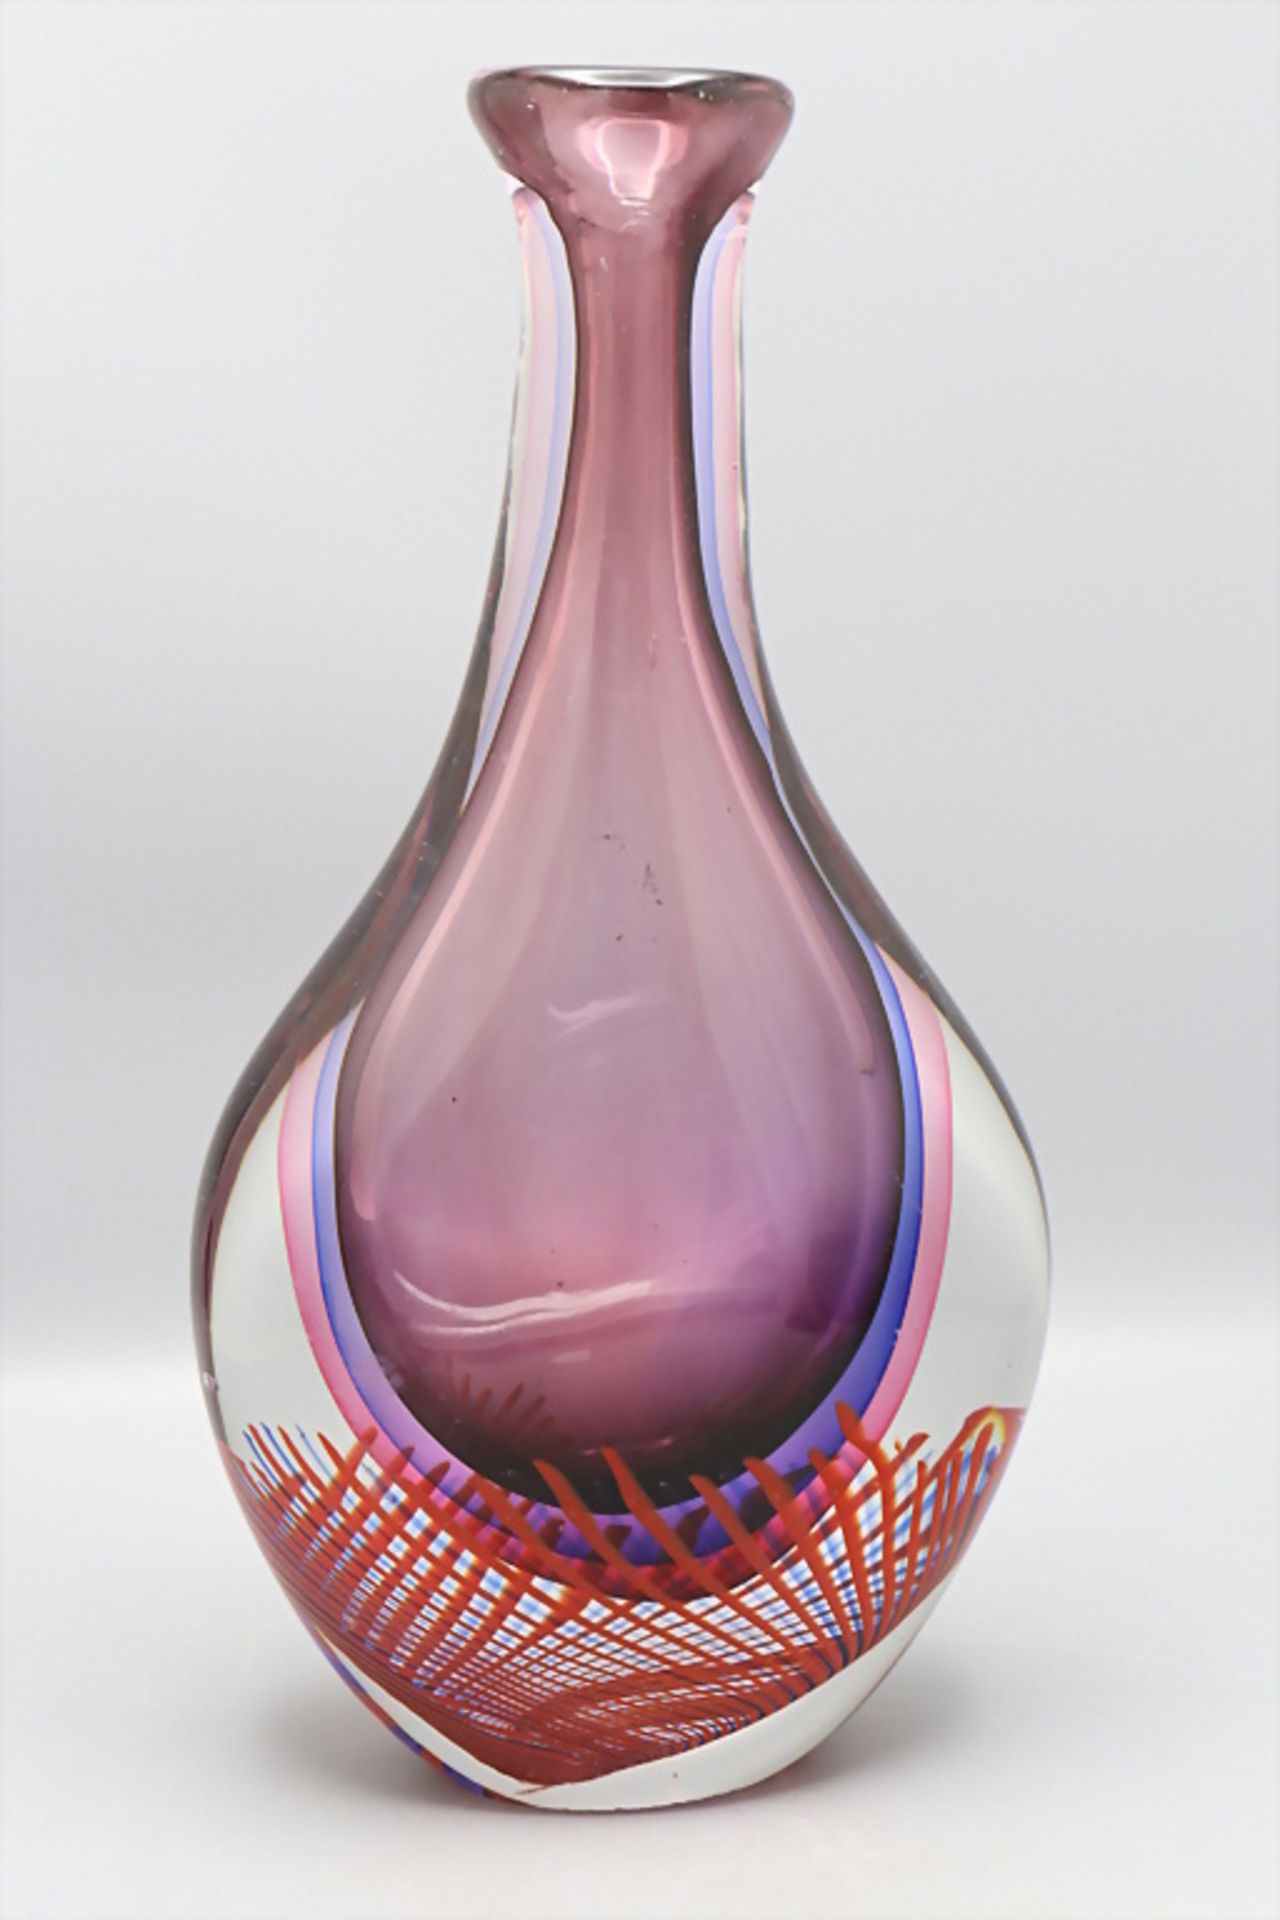 Glasziervase / A decorative glass vase 'Sommerso', Flavio Poli, Murano, 1960er Jahre